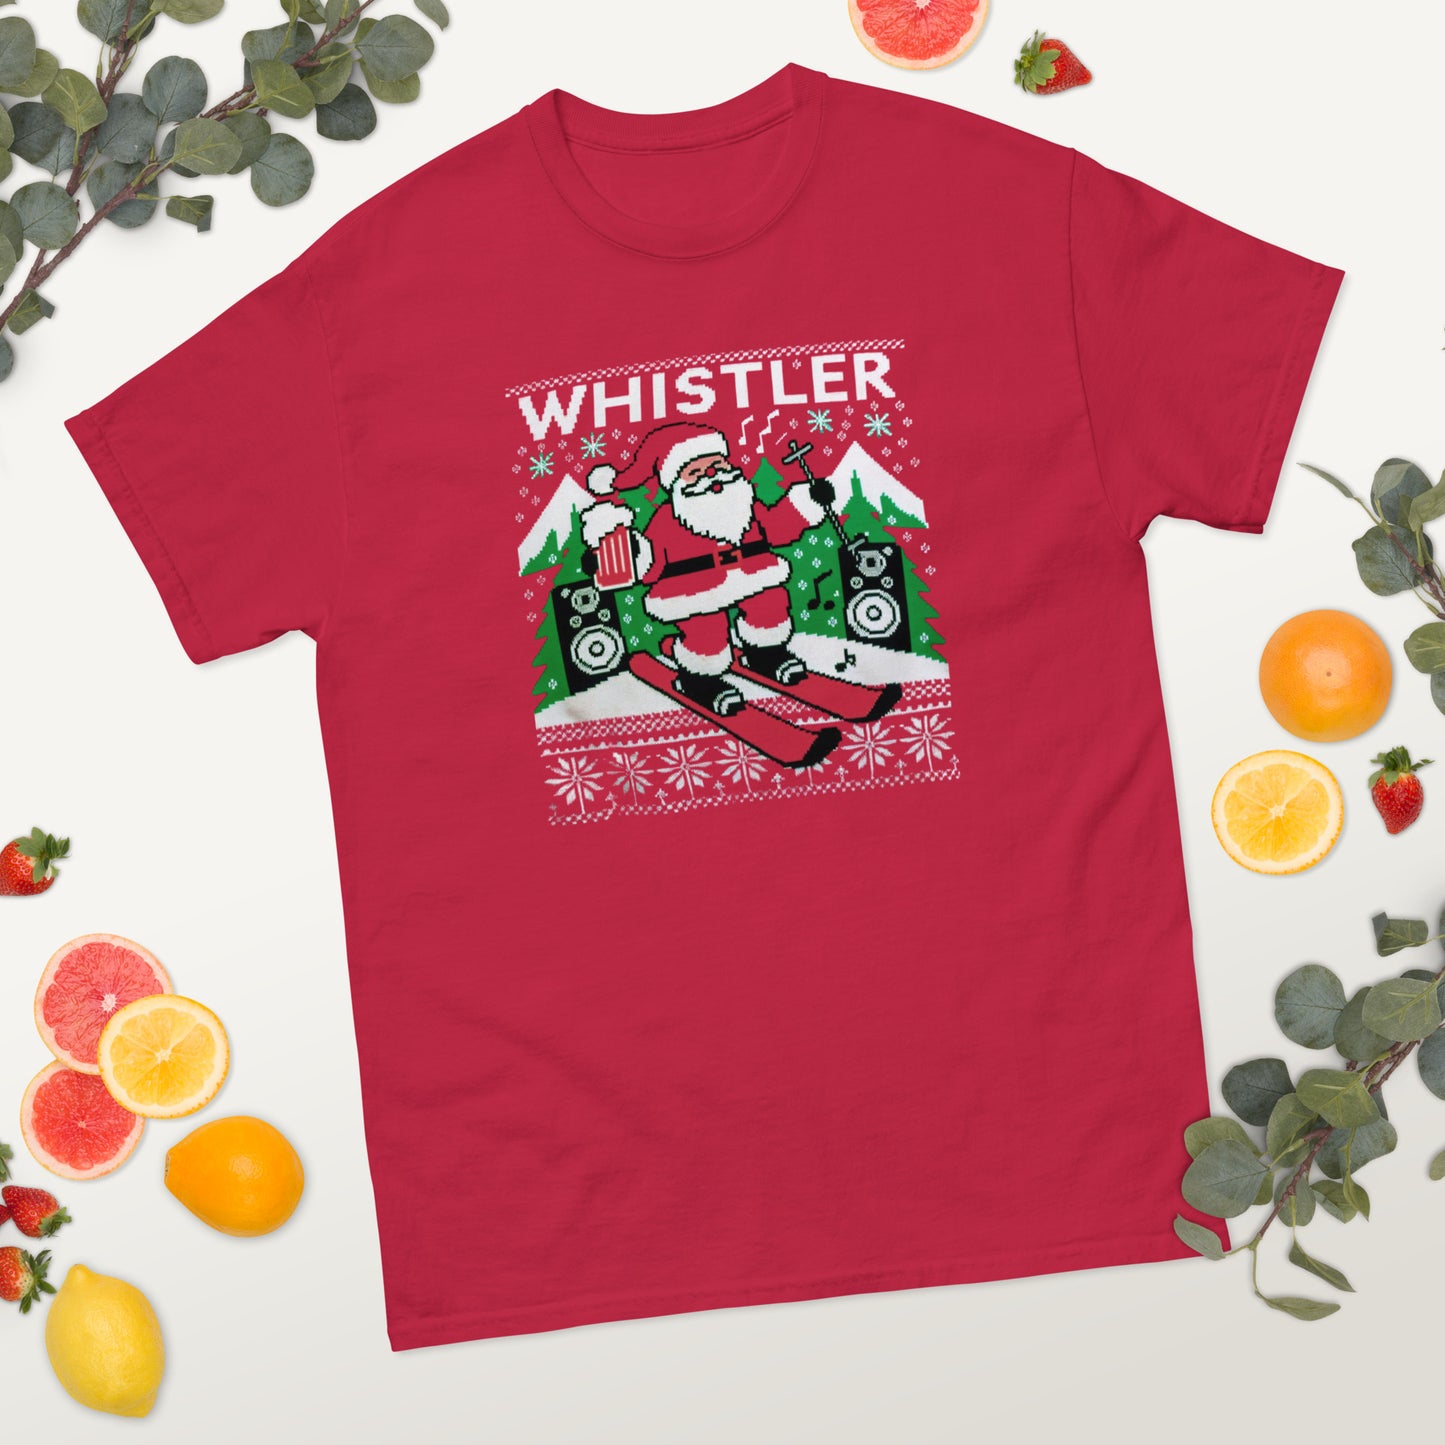 Skiing santa raving in whistler ugly christmas sweater, printed by Whistler shirts